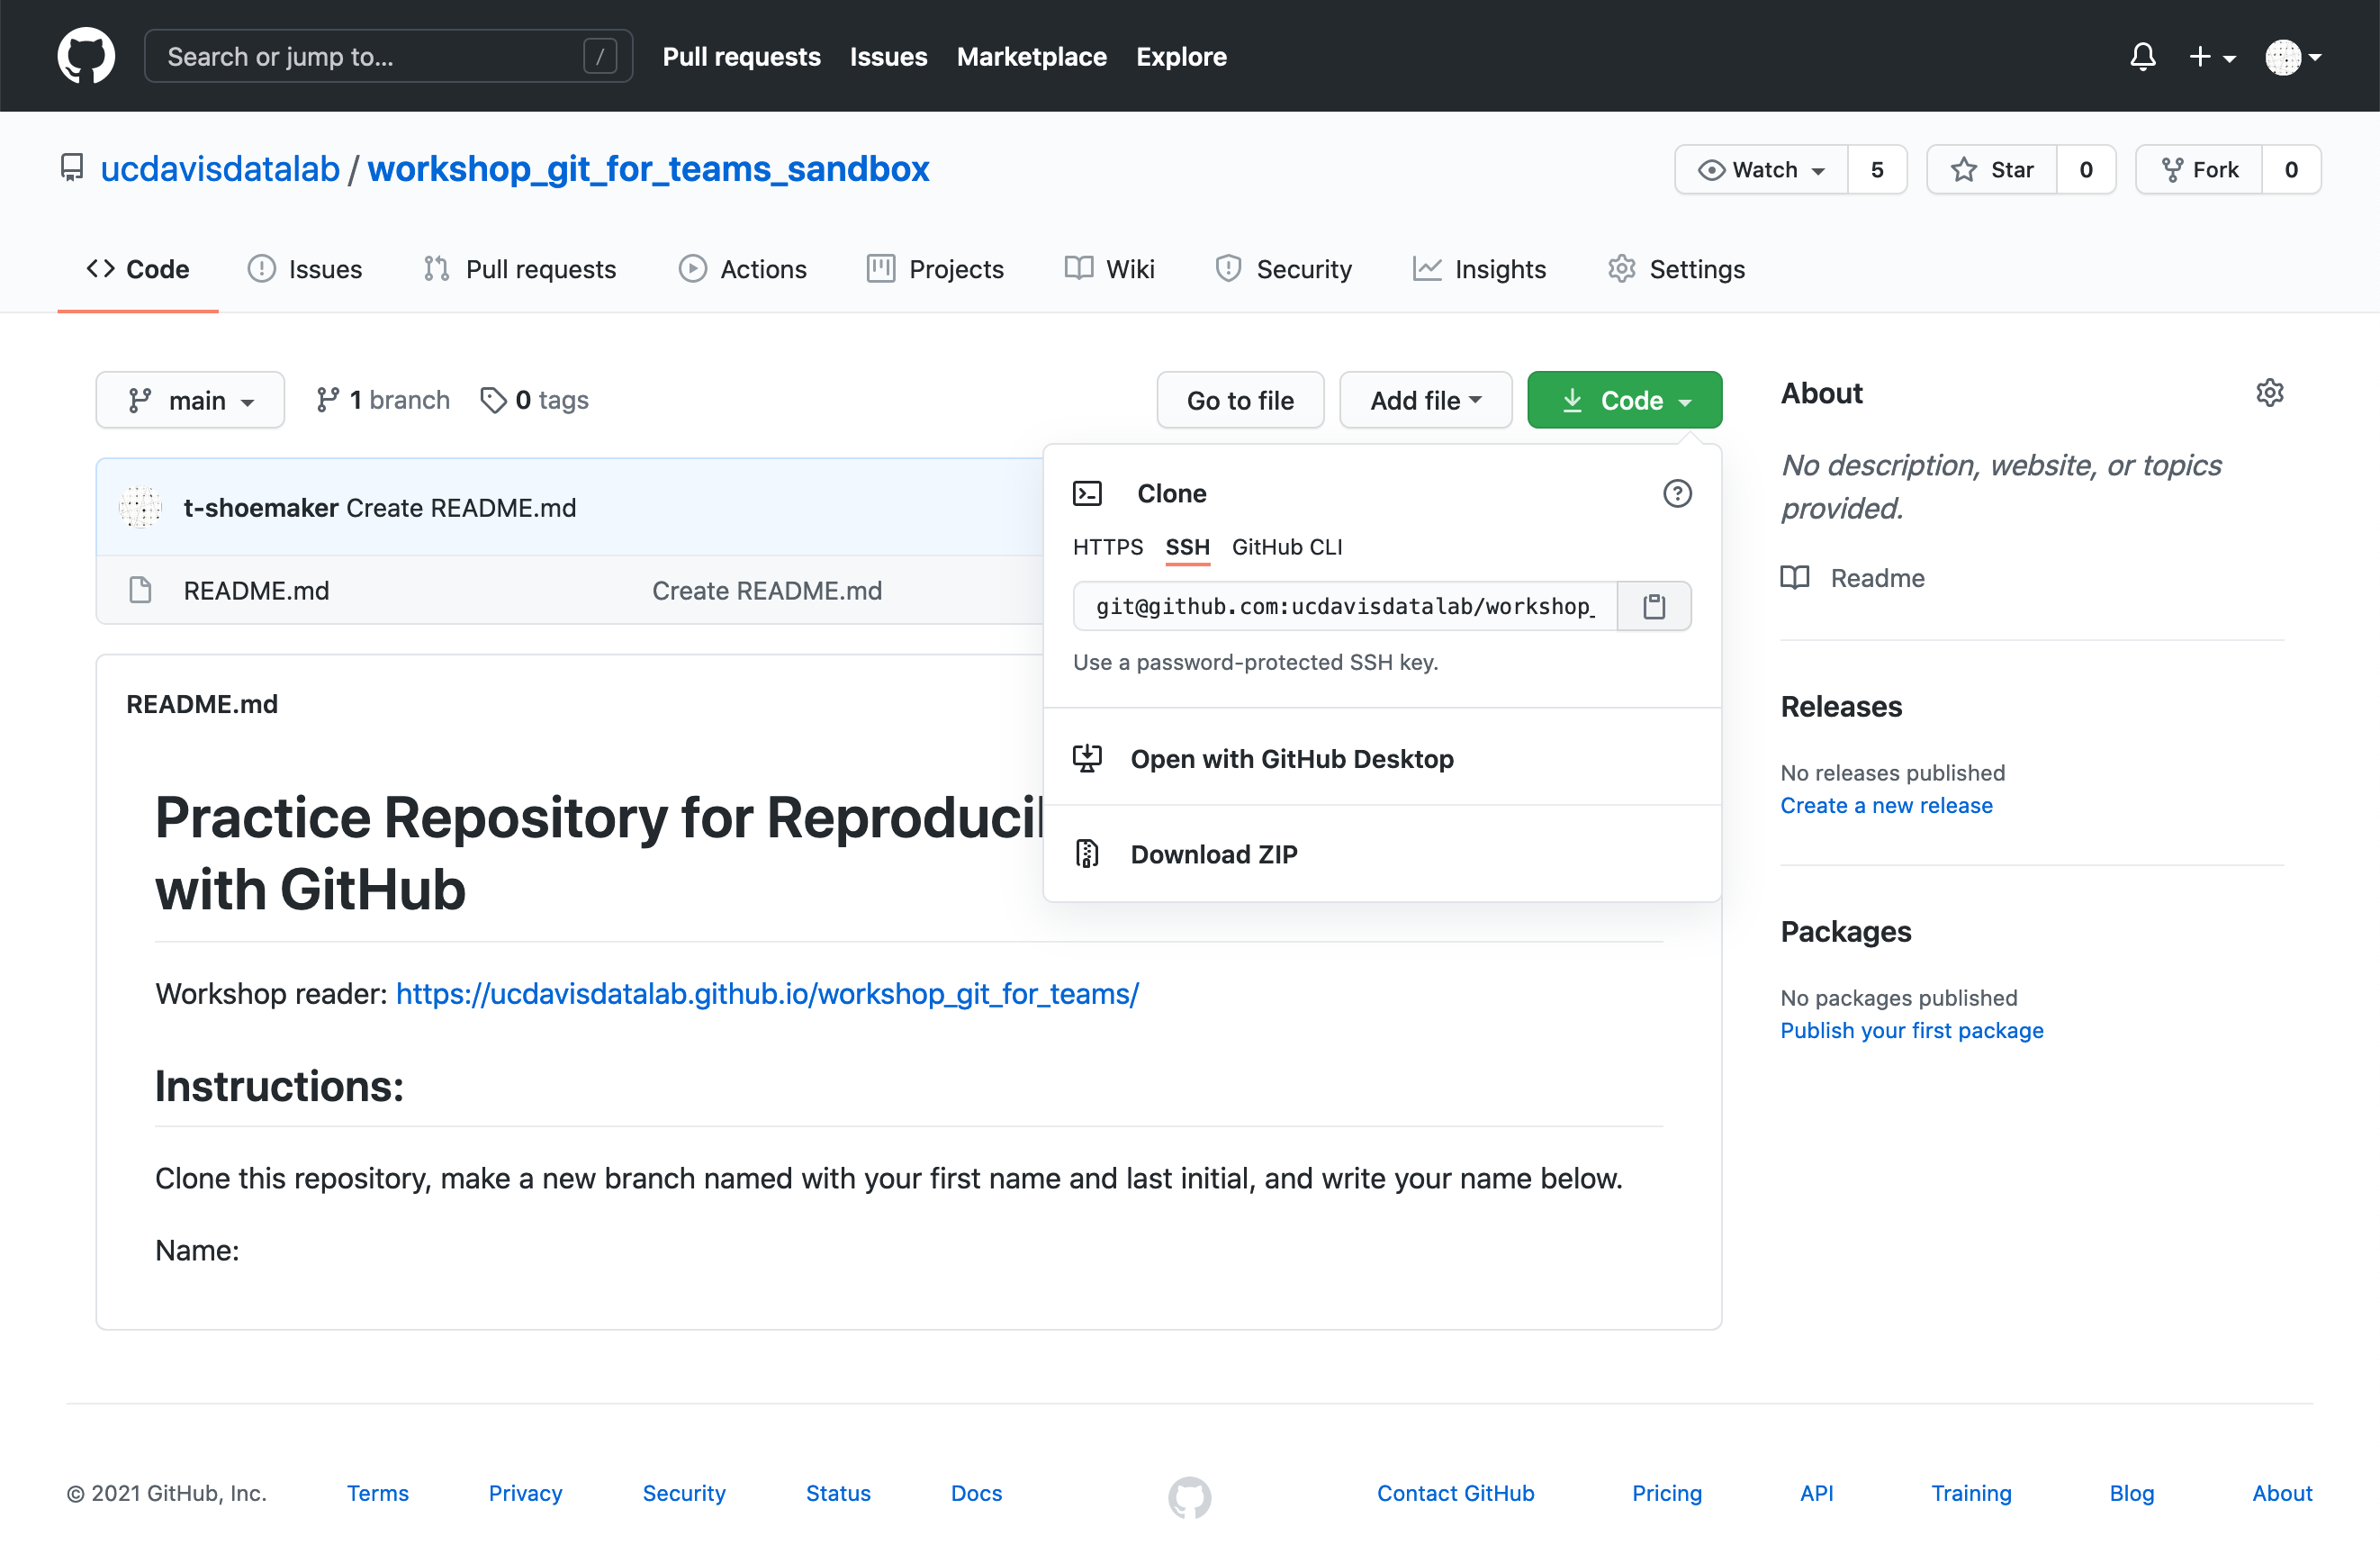 The sandbox repository on GitHub